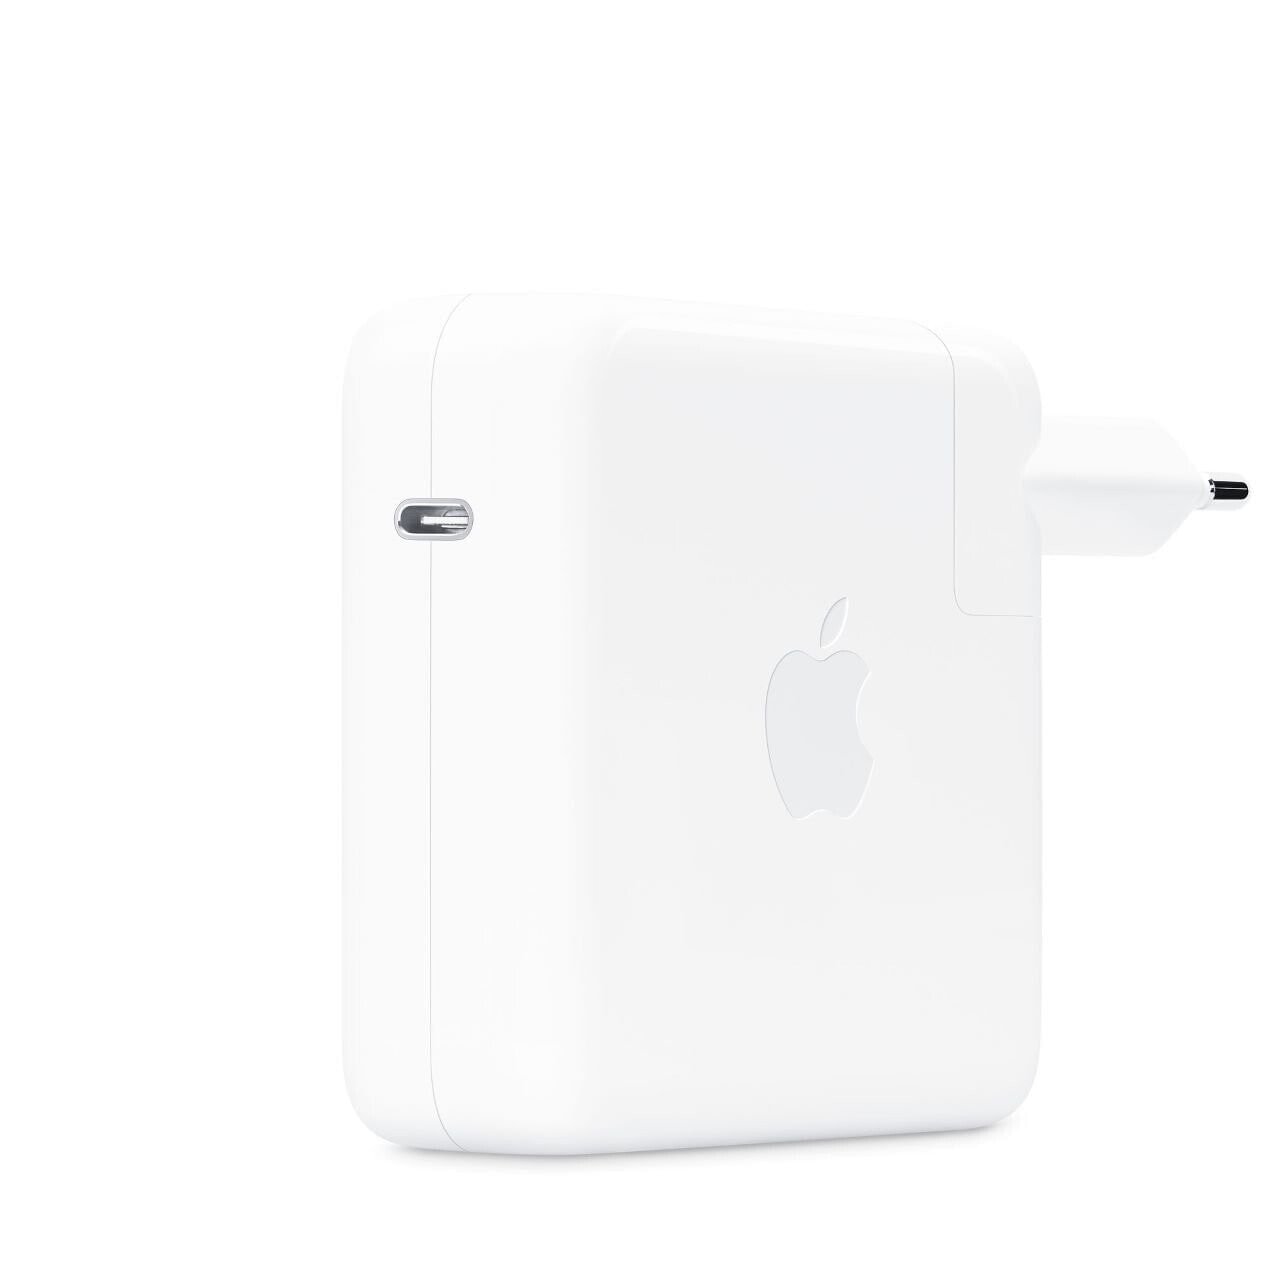 Зарядный адаптер usb c. Адаптер питания Apple 61w USB-C. Apple 96w USB-C Power Adapter. Сетевой адаптер для MACBOOK Apple 87w USB-C Power Adapter. Блок питания Apple mrw22zm/a для Apple.